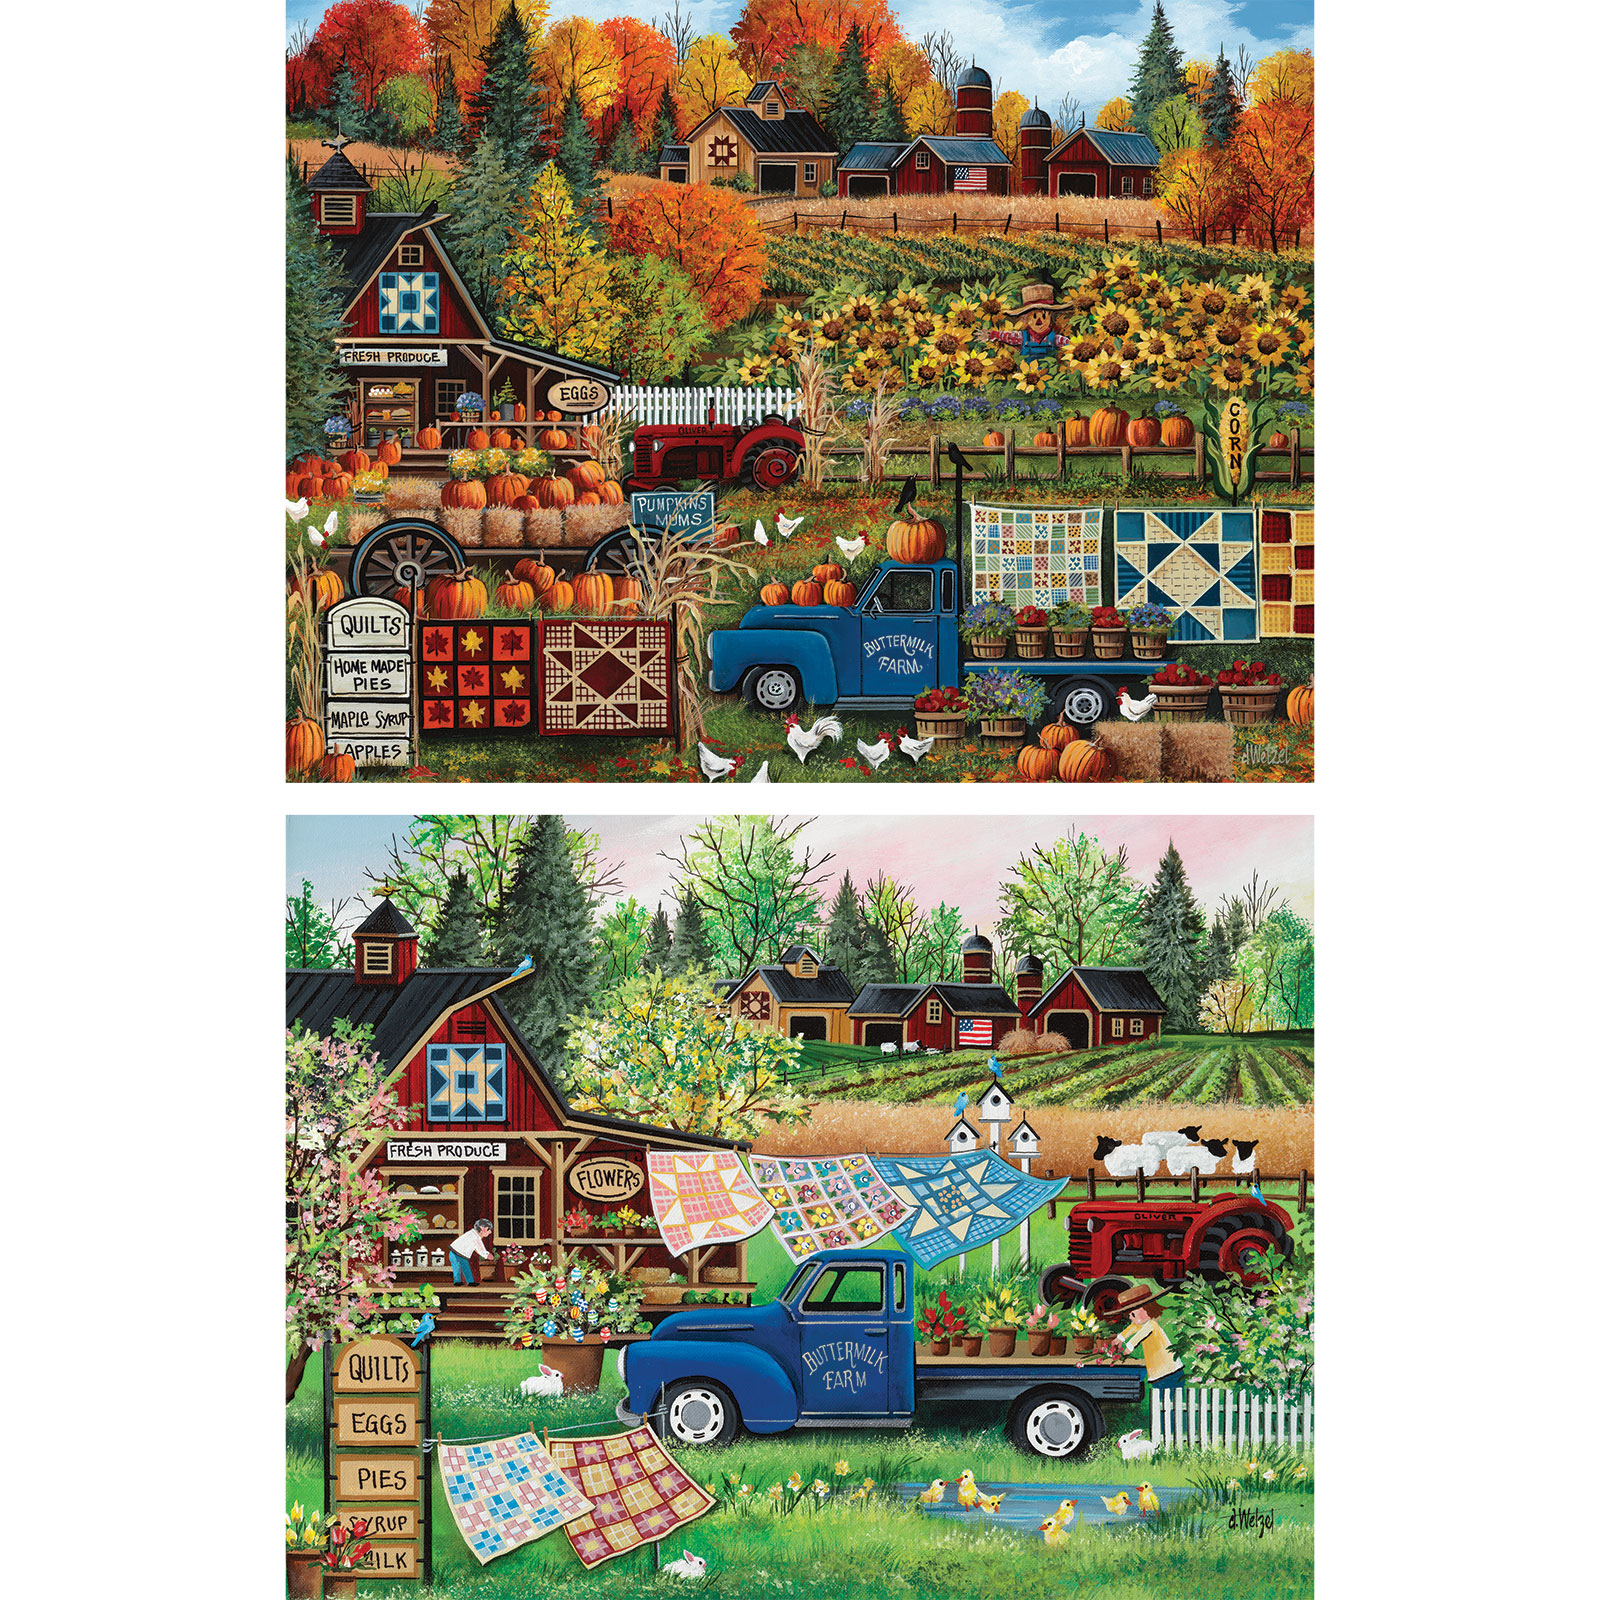 Set of 2: Debbi Wetzel 1000 Piece Jigsaw Puzzles